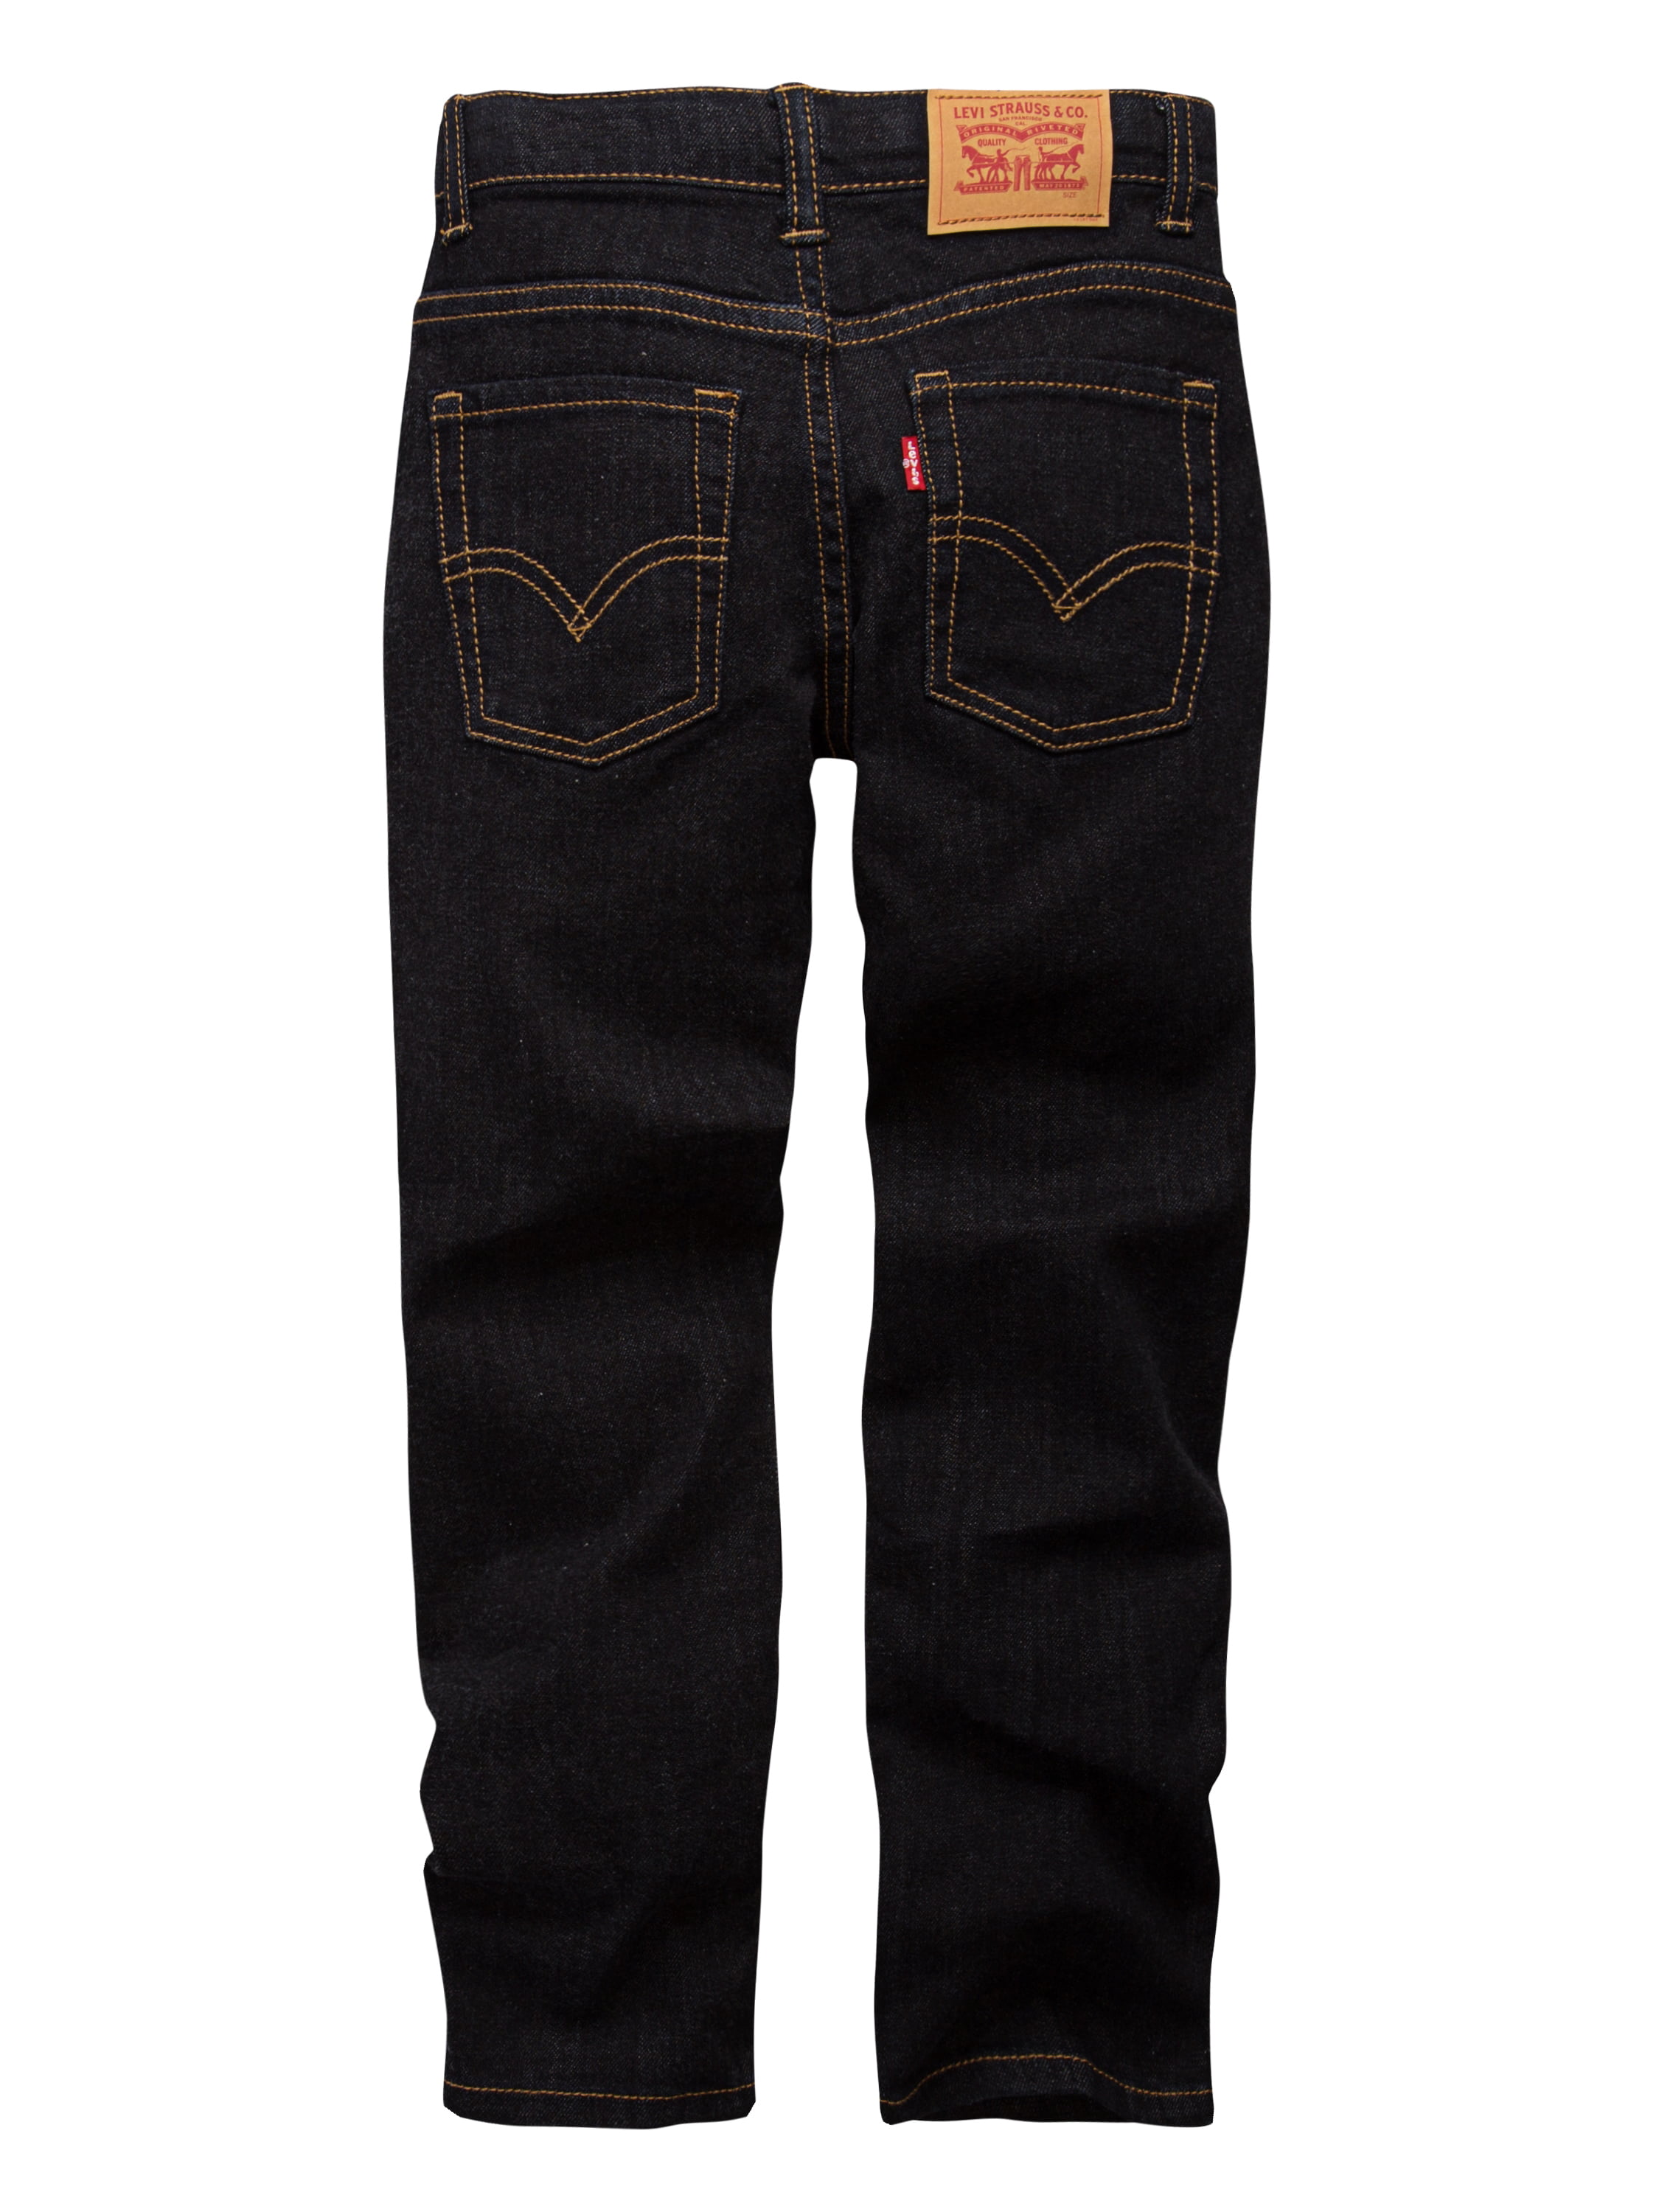 Levi's Boys 510 Skinny Fit Jeans, Sizes 